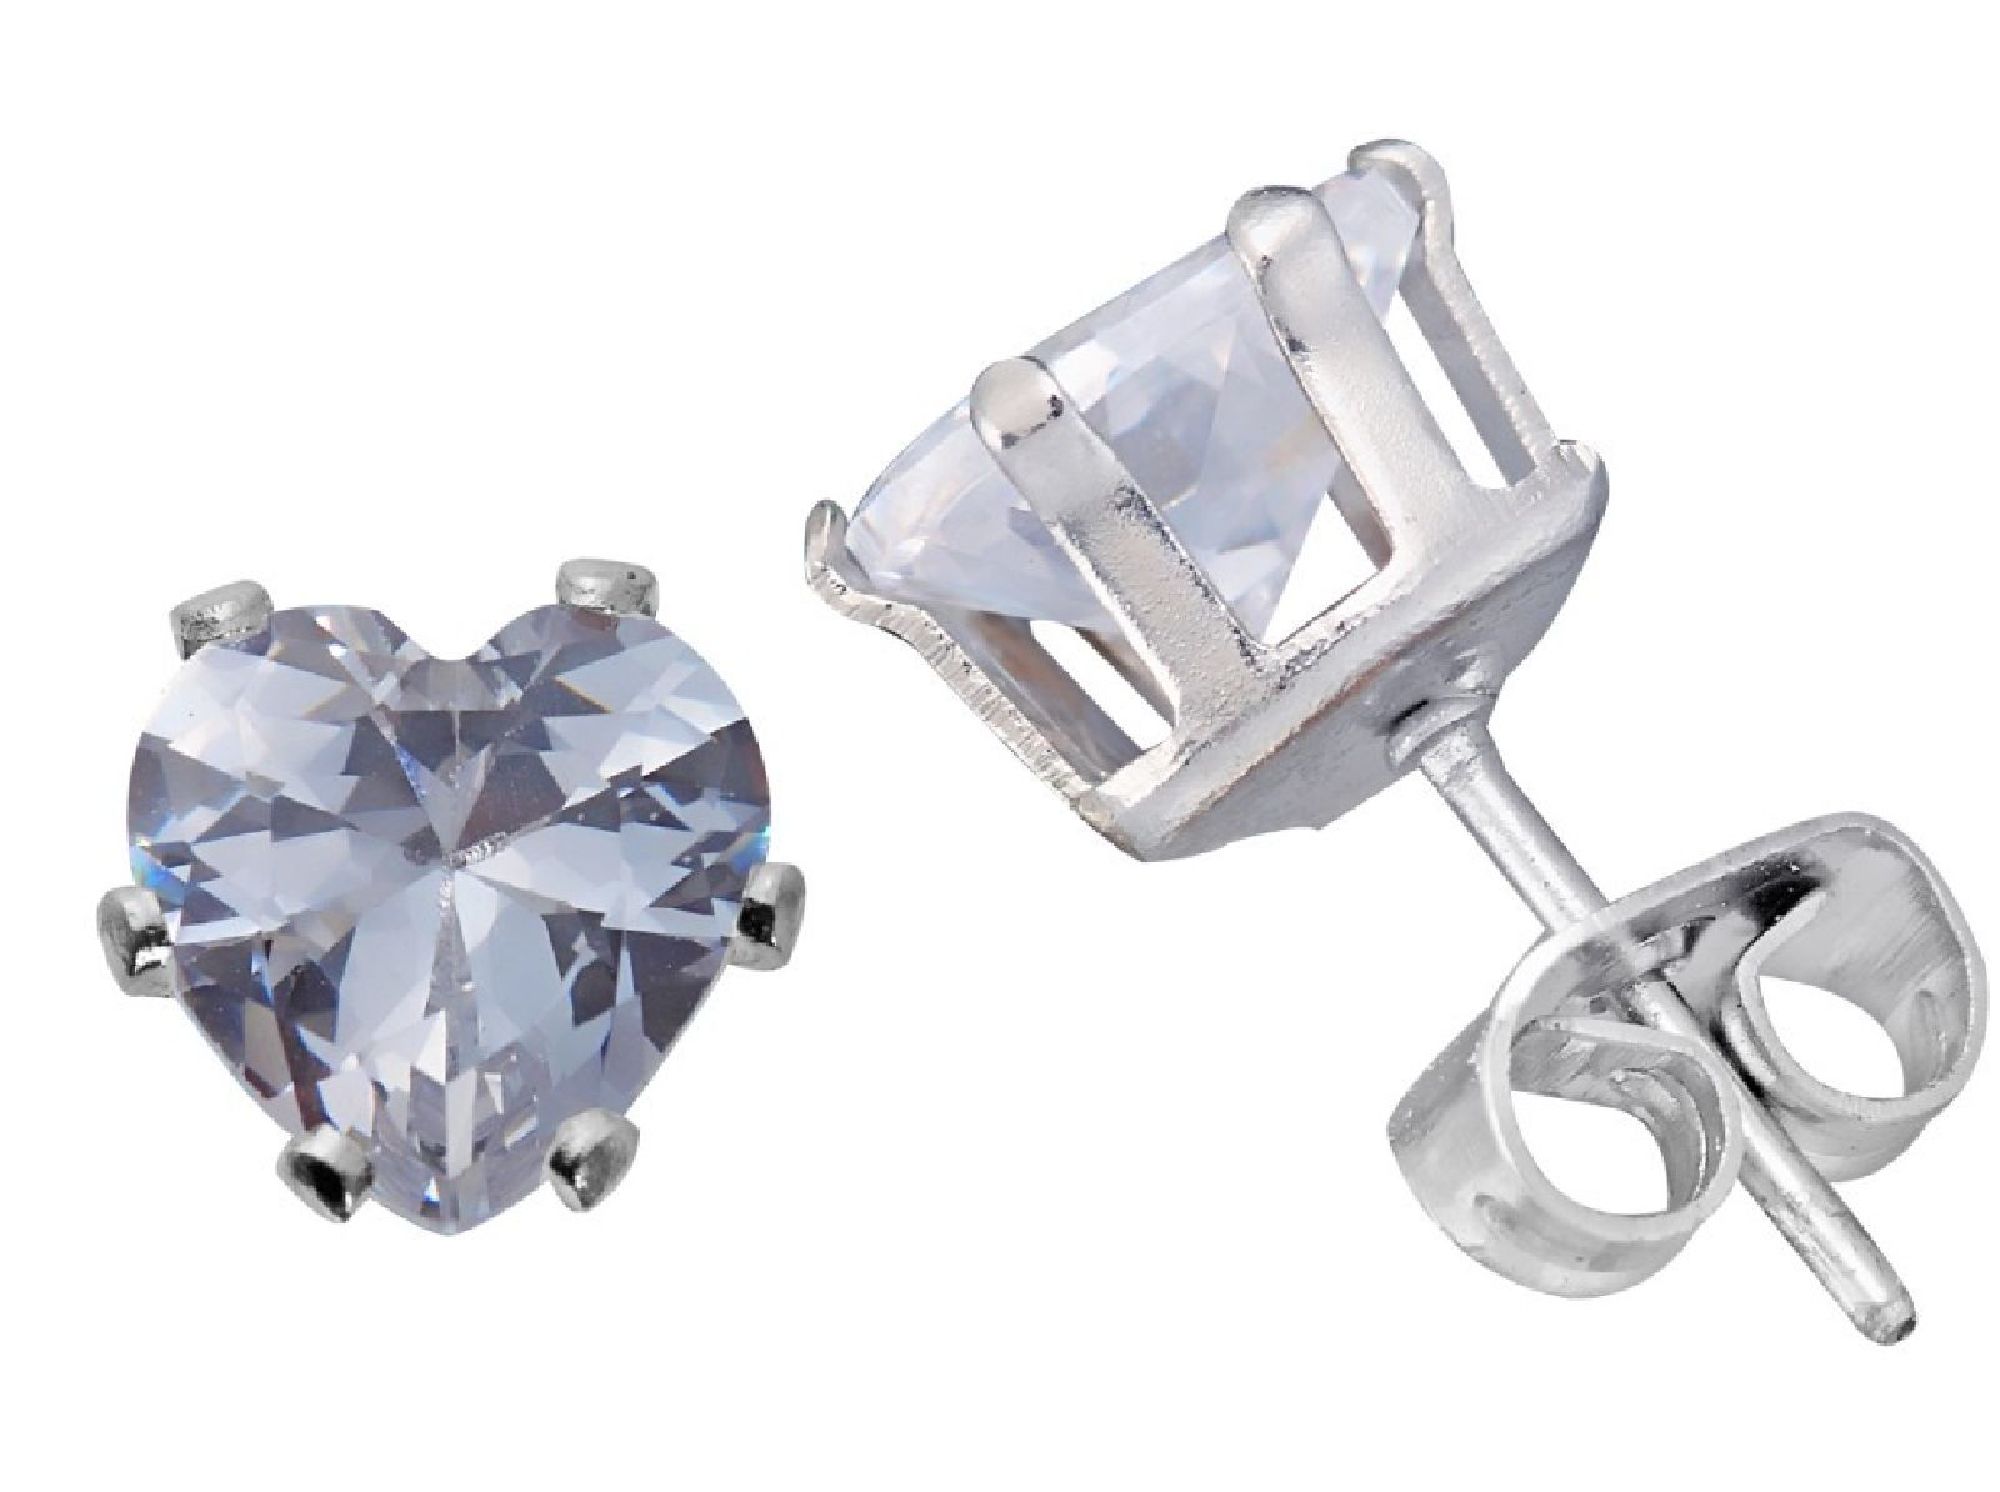 1 Carat Heart Shape White Diamond manmade Stud Earrings in Platinum over Sterling Silver Designed in France